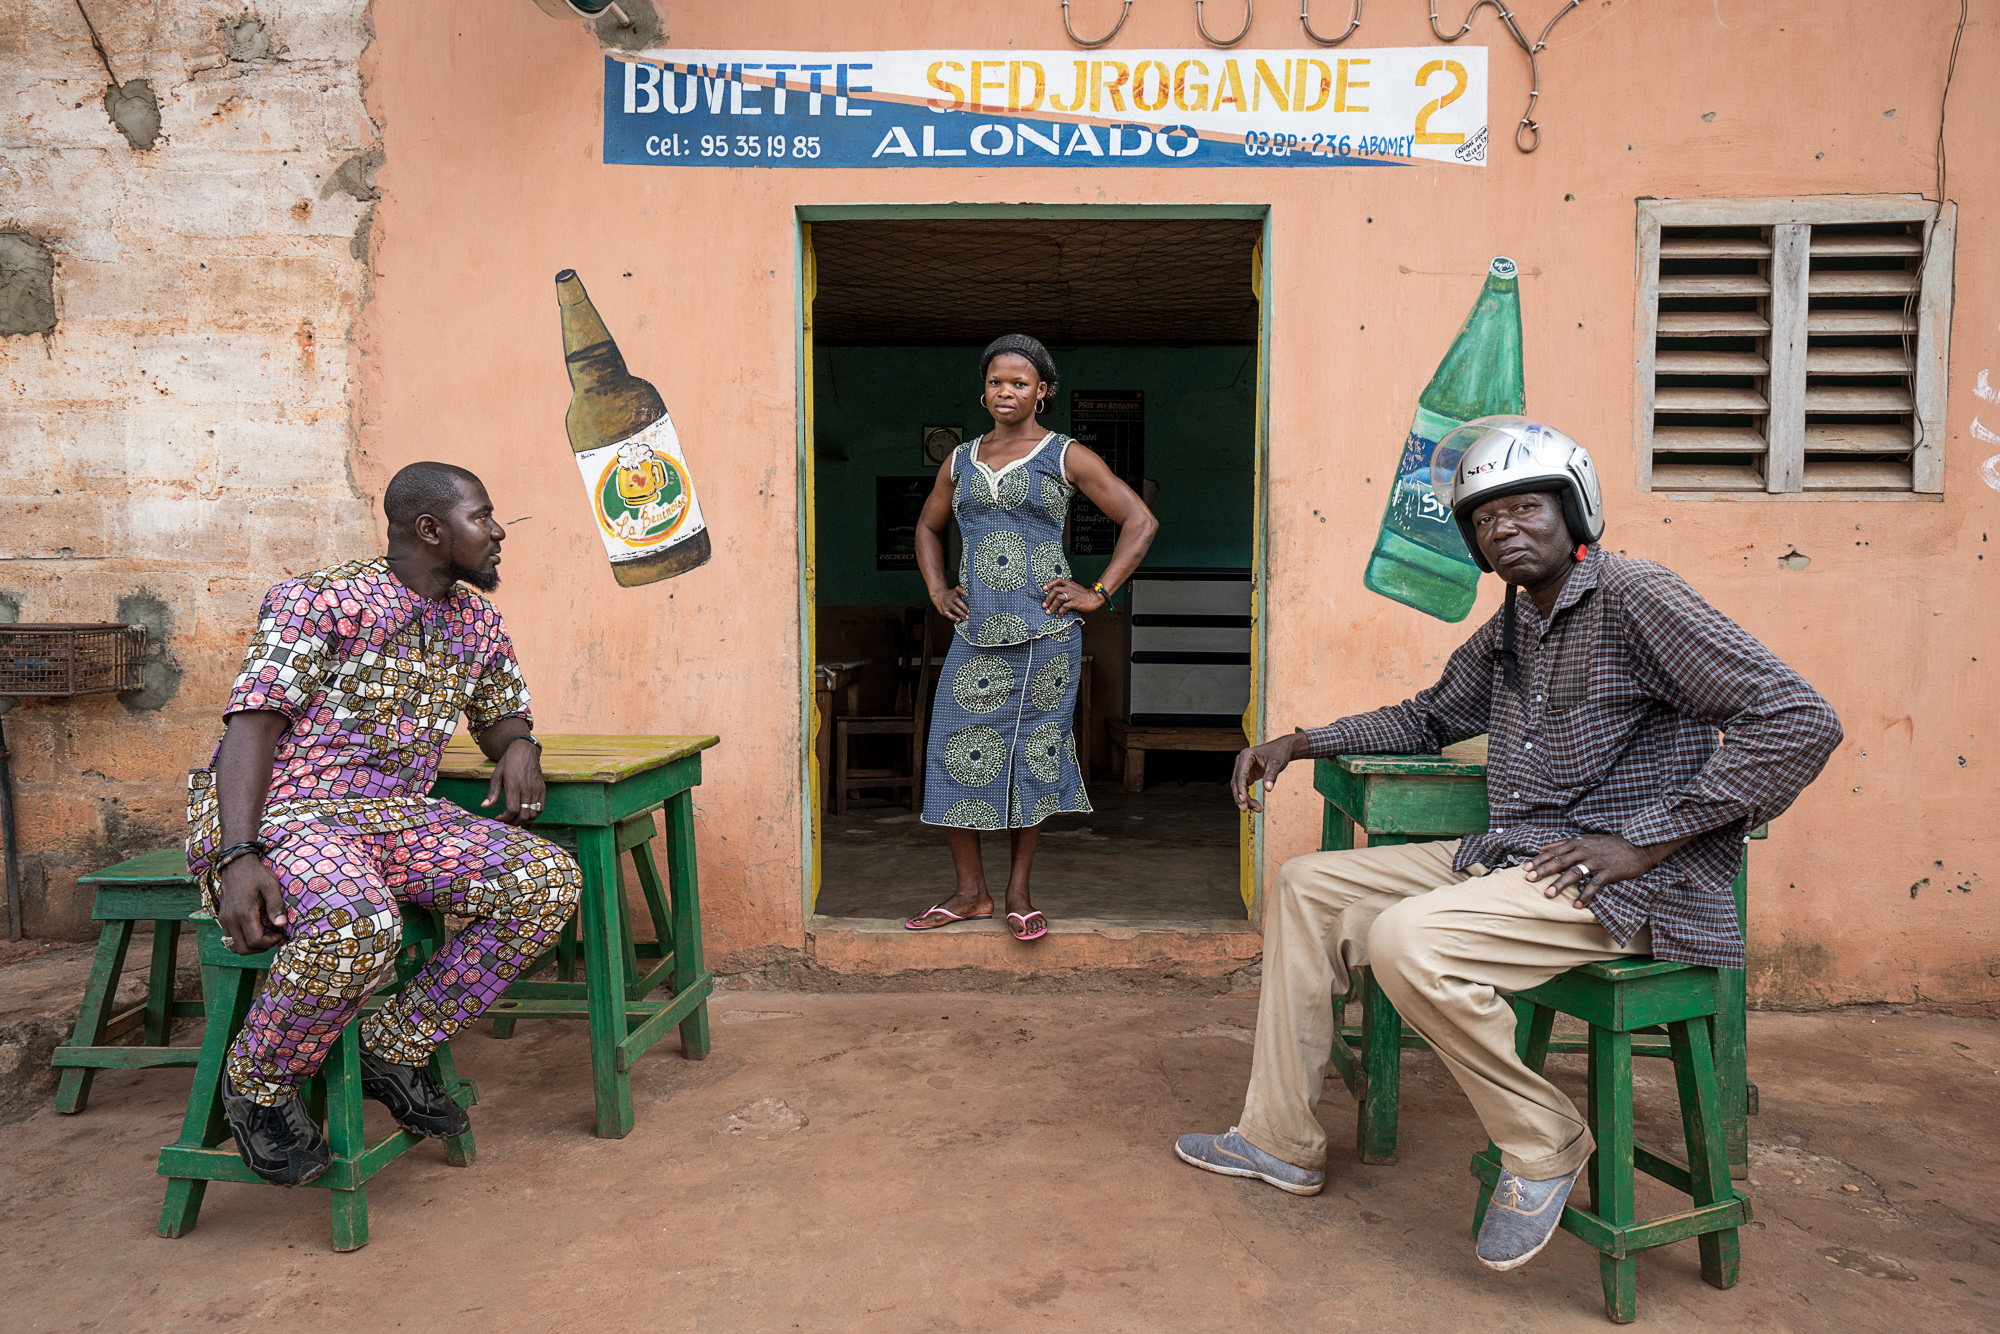 Benin_2000_Two men with woman in a bar.jpg